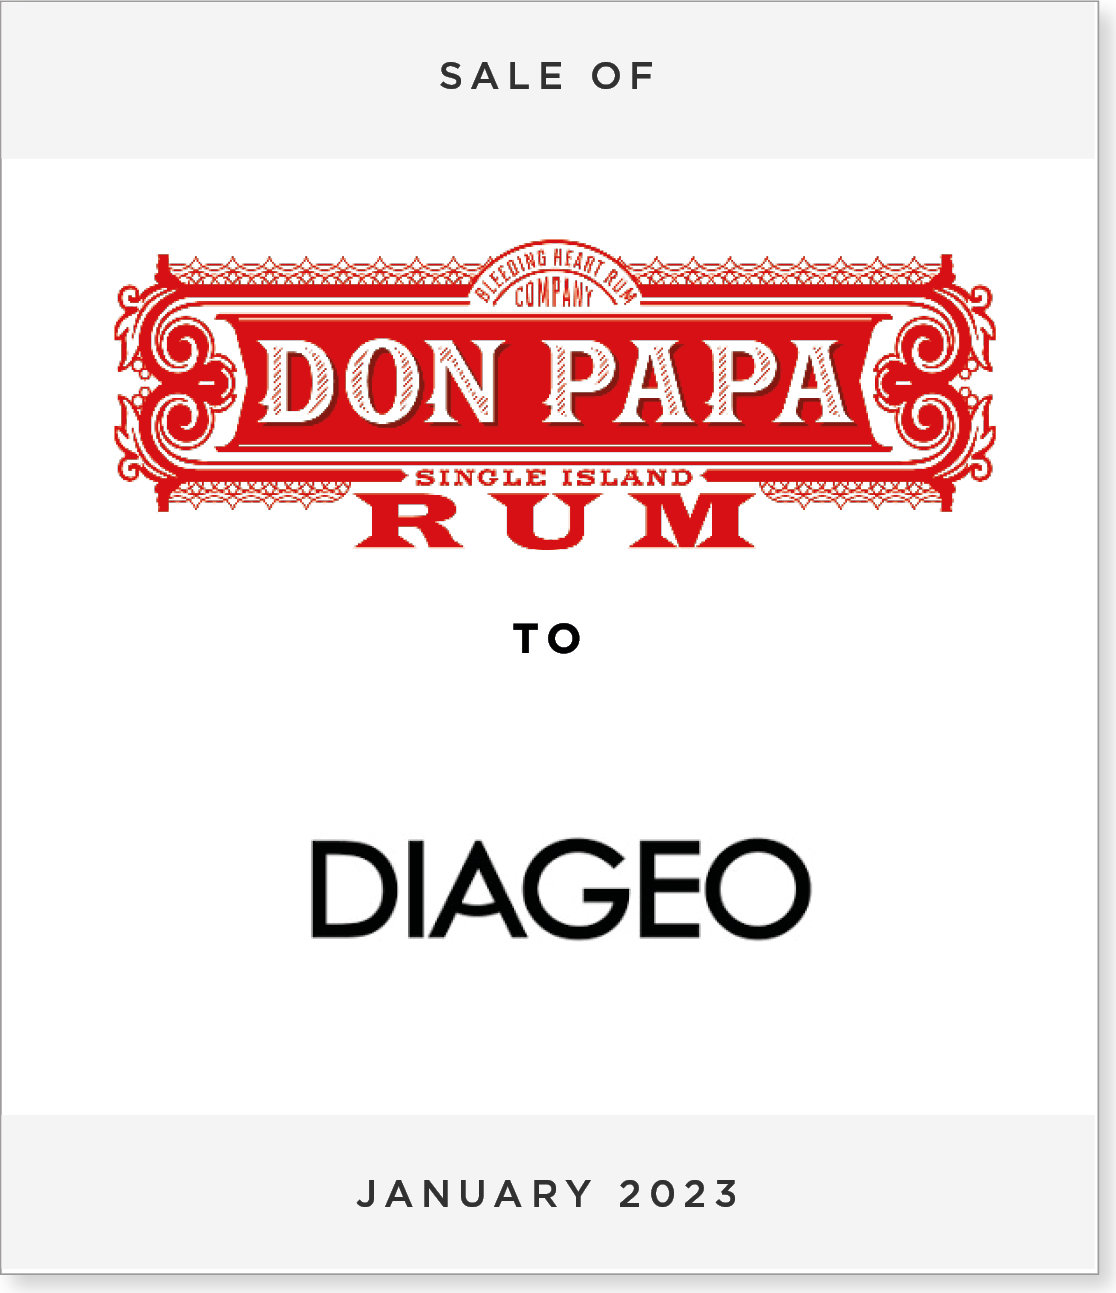 DonPapa_Diageo Transactions